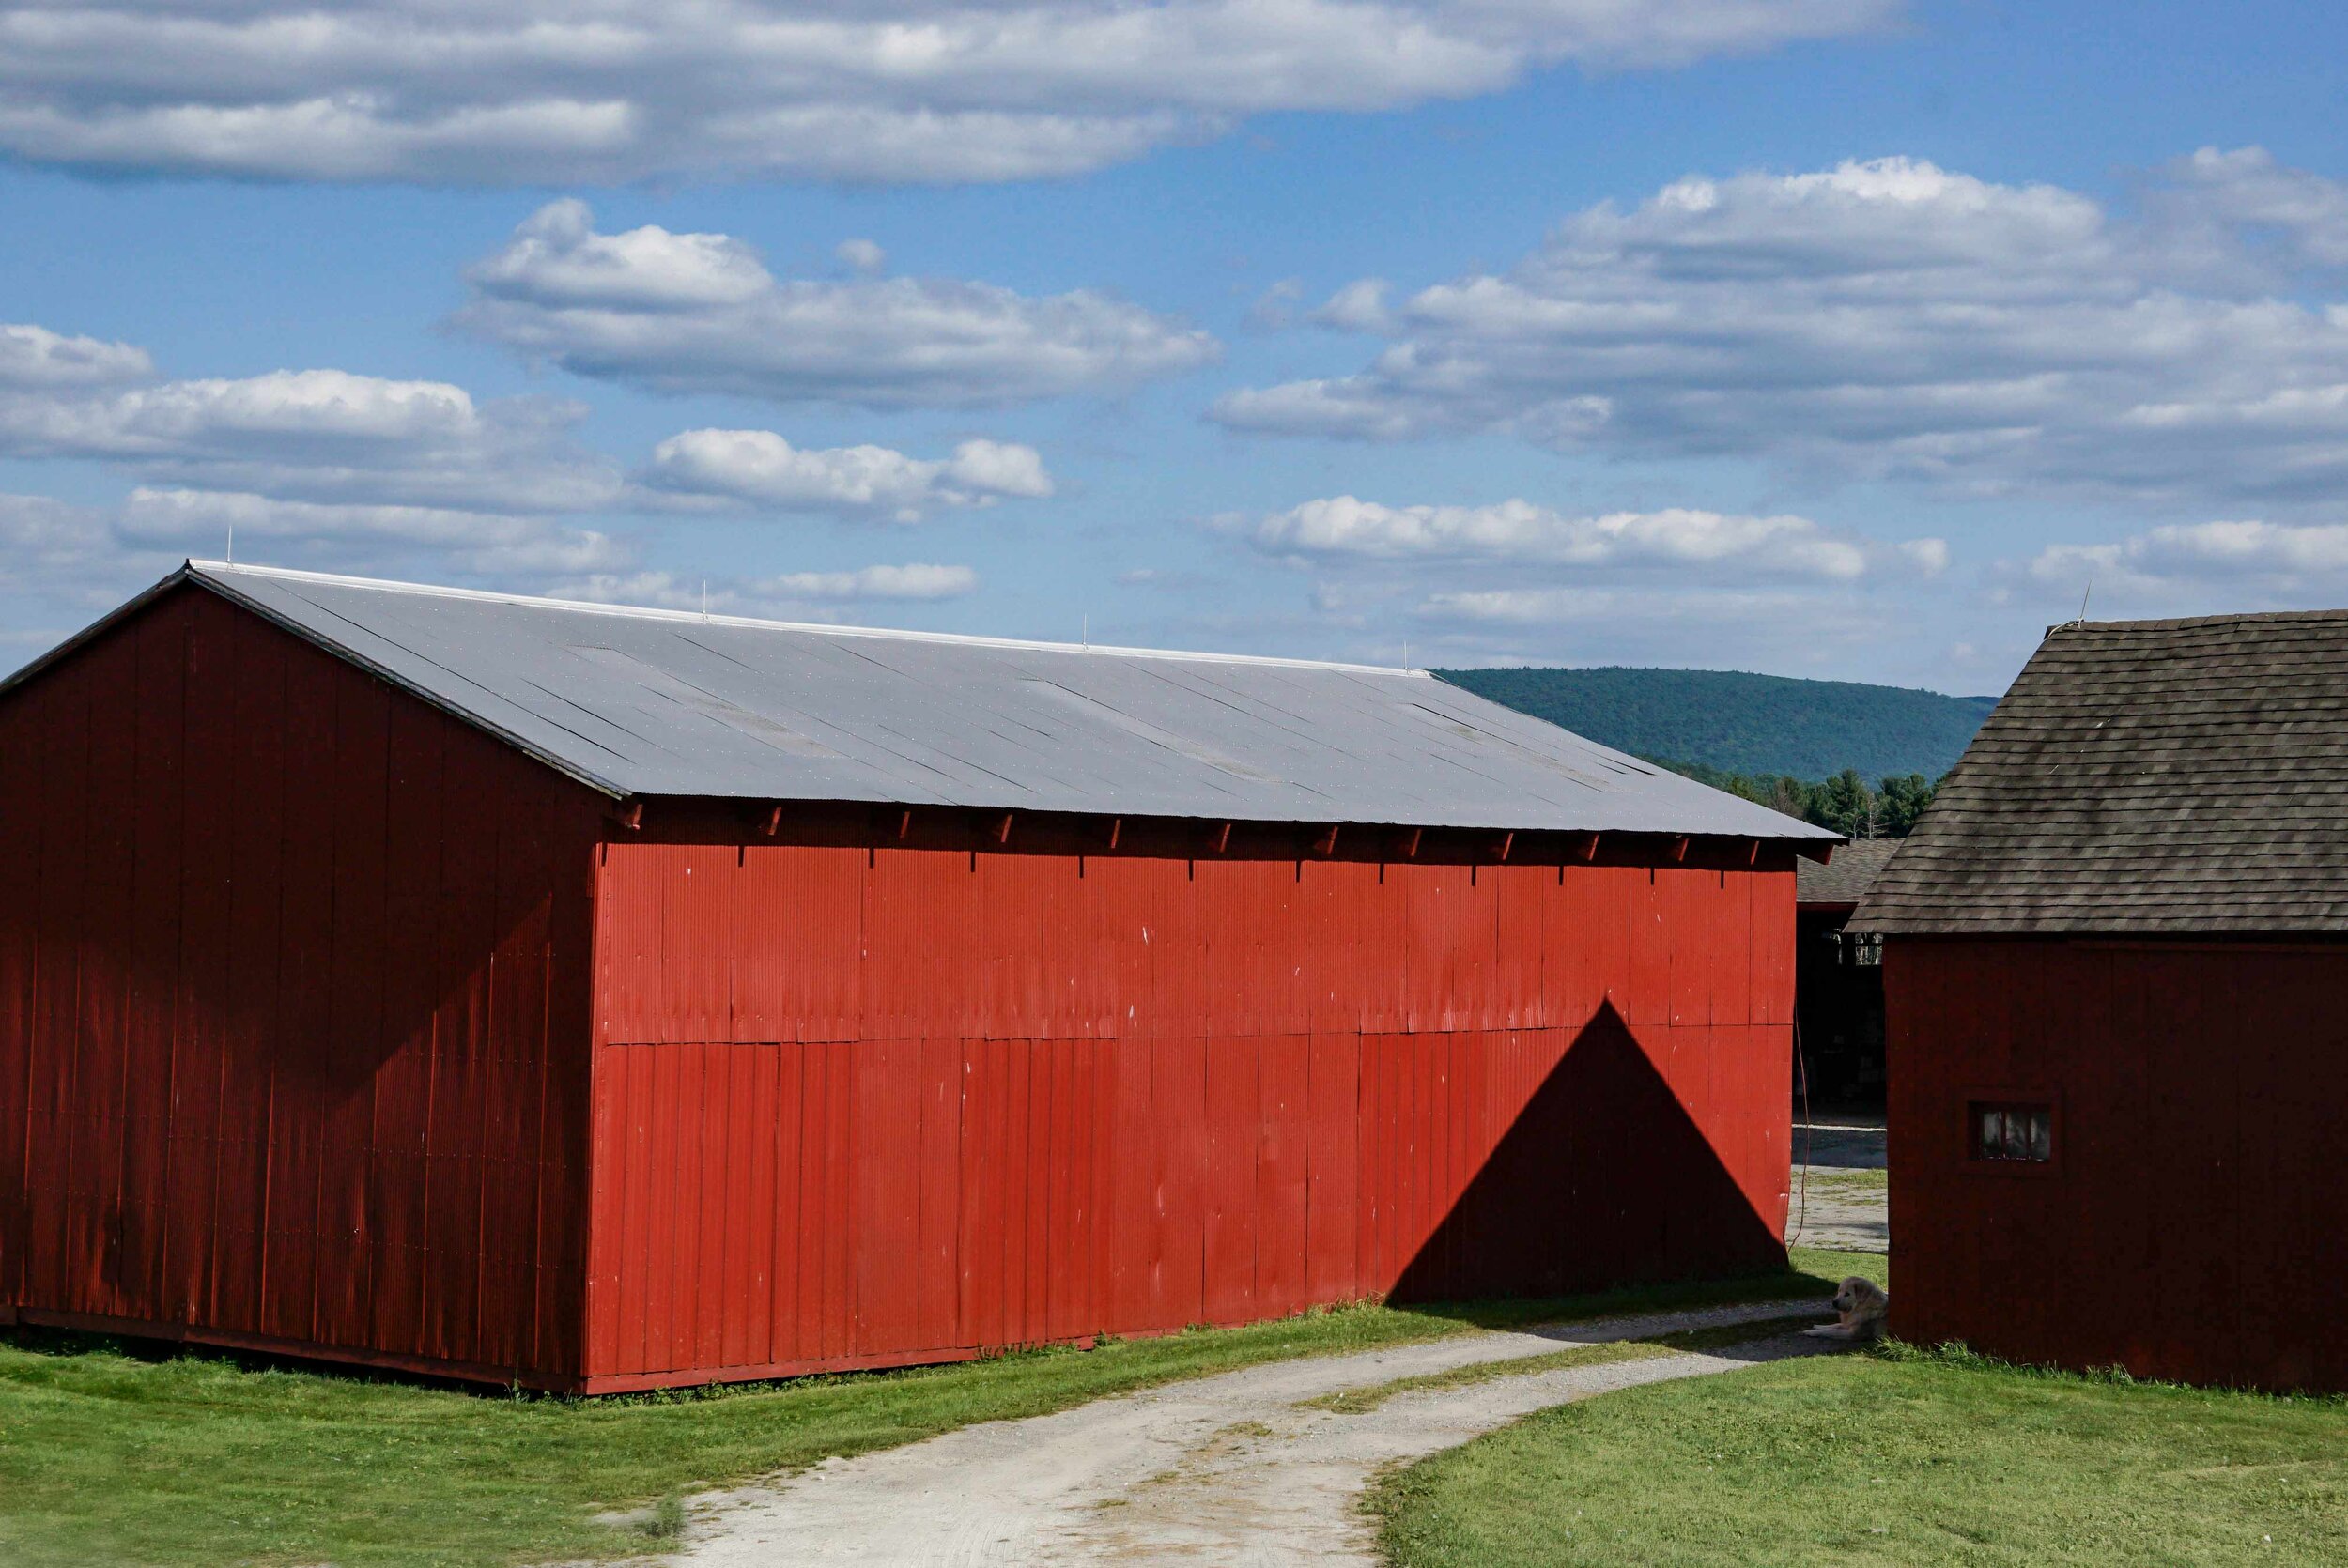 _Red barn and triangleDSC5789.jpg